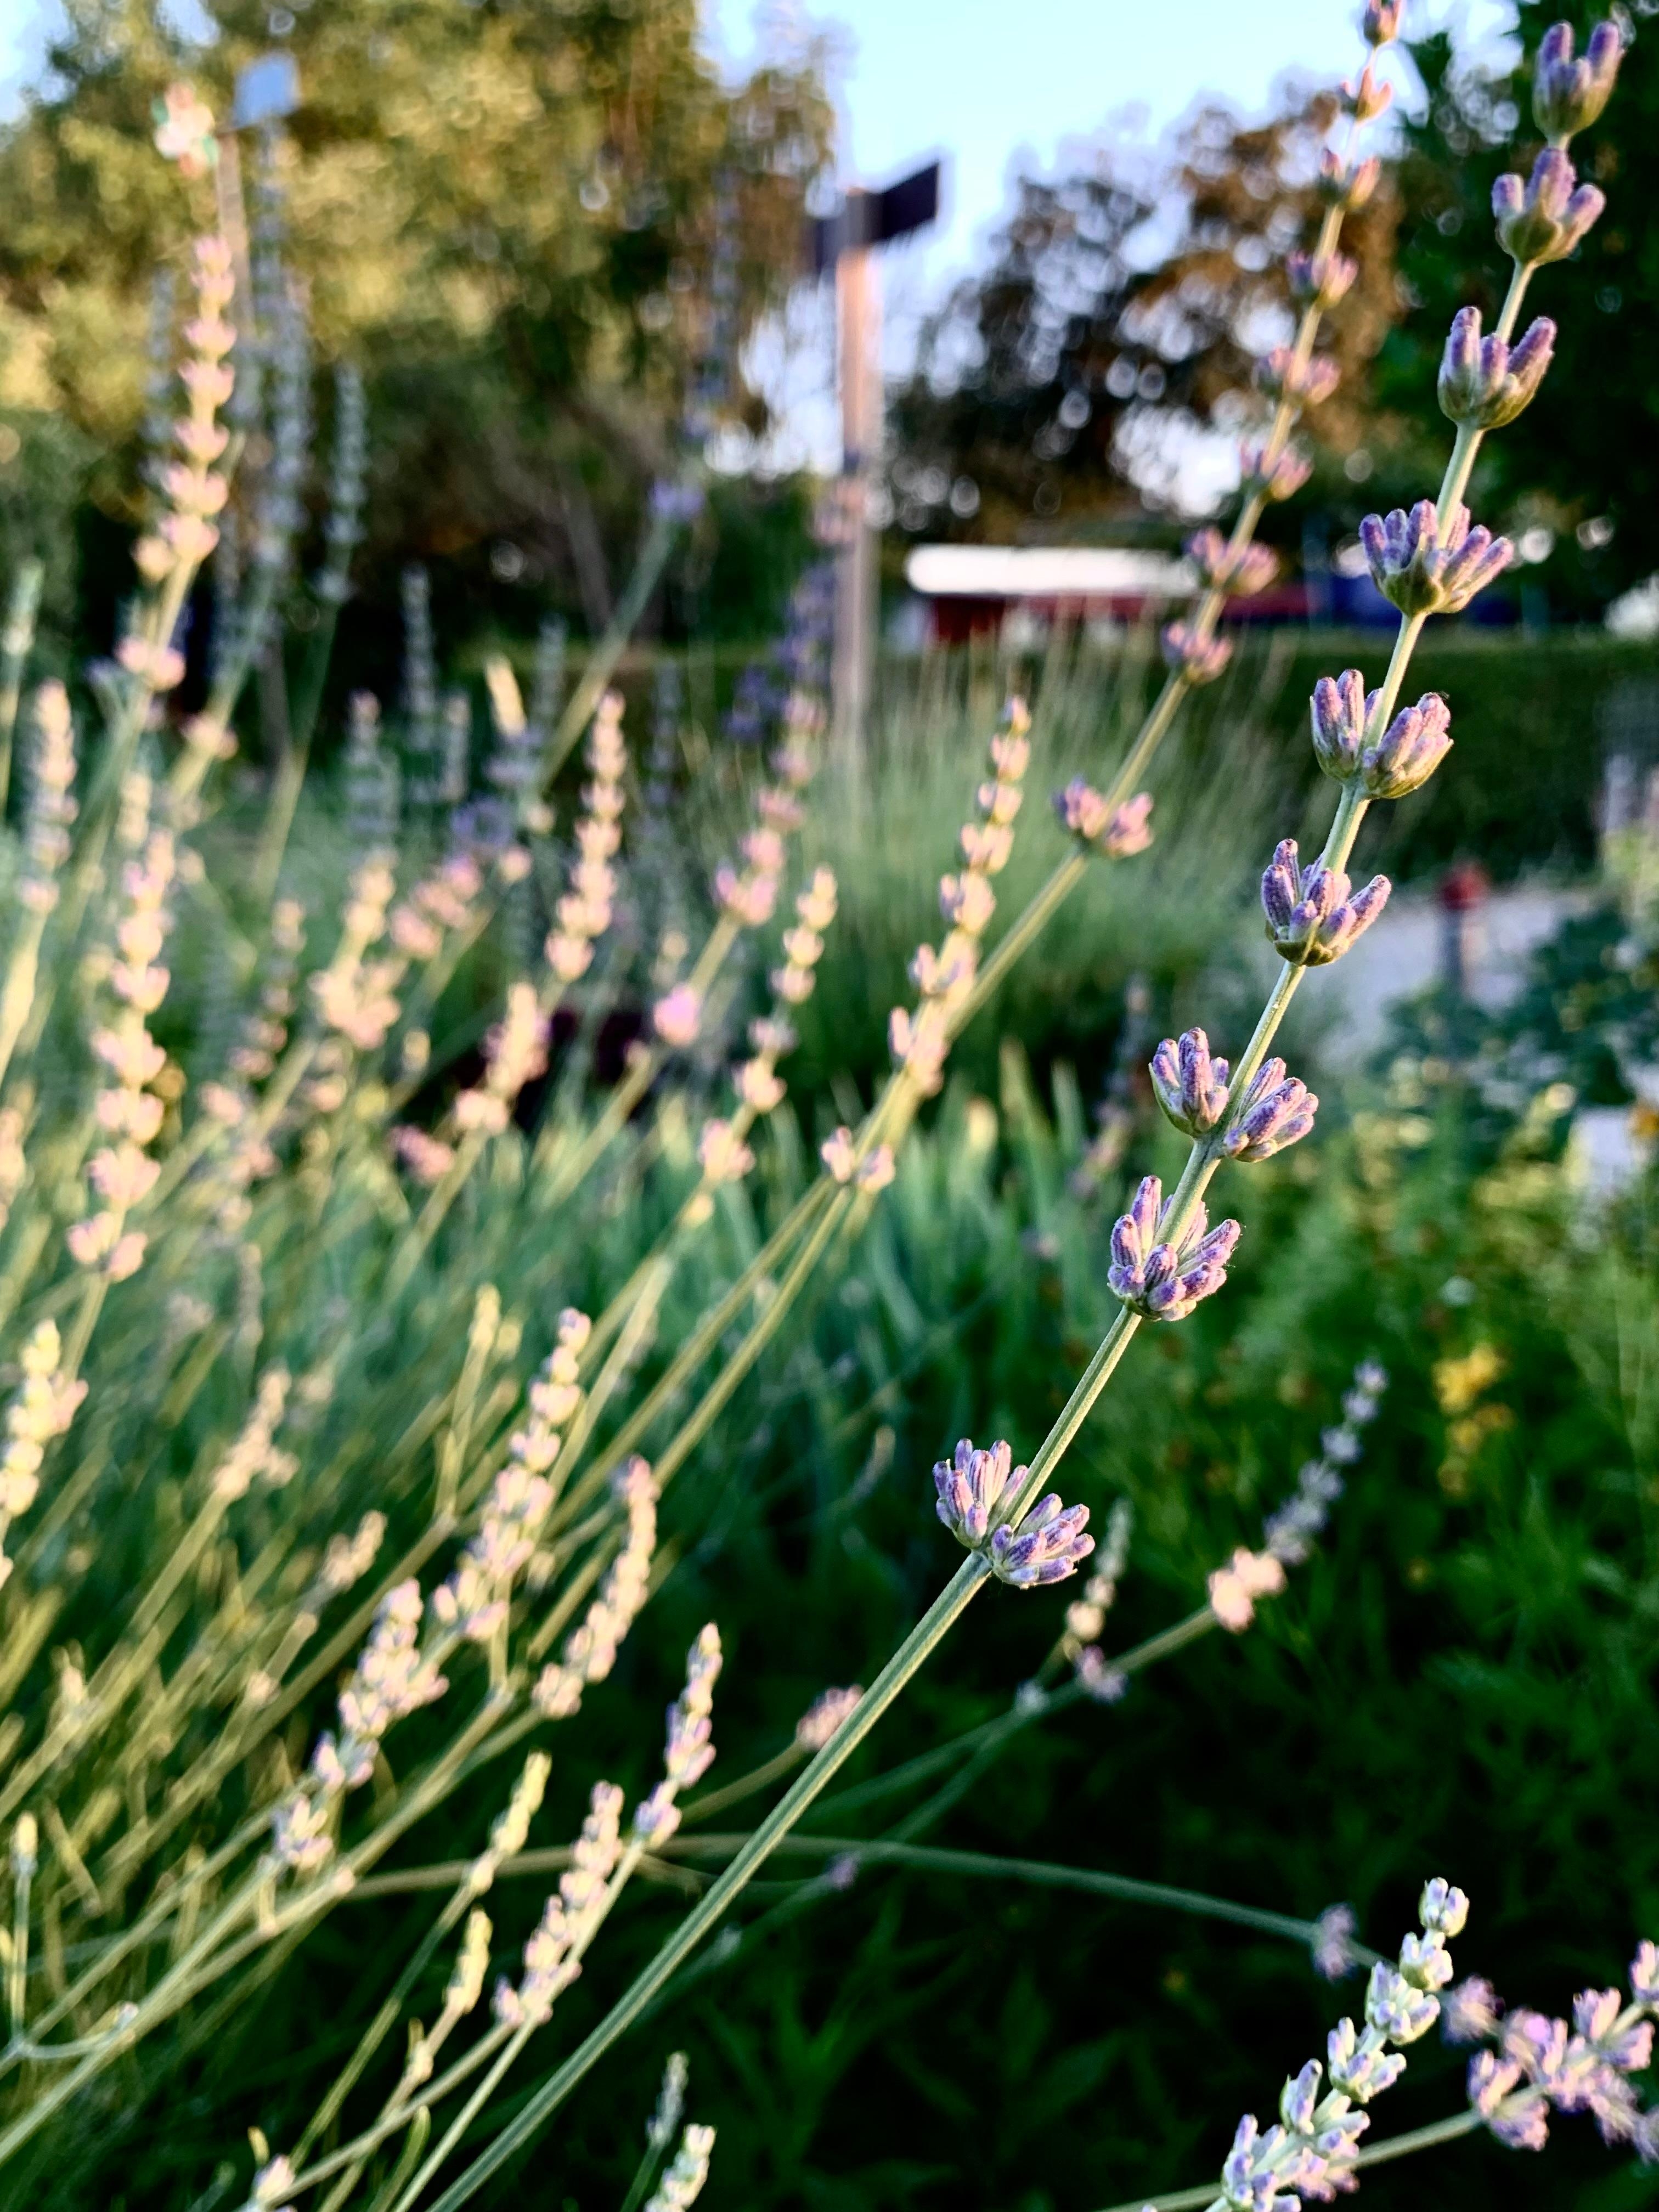 Lavendel im Garten 🪻

#garten #outdoor #lavendel #flower #blüte #duft #sommer 